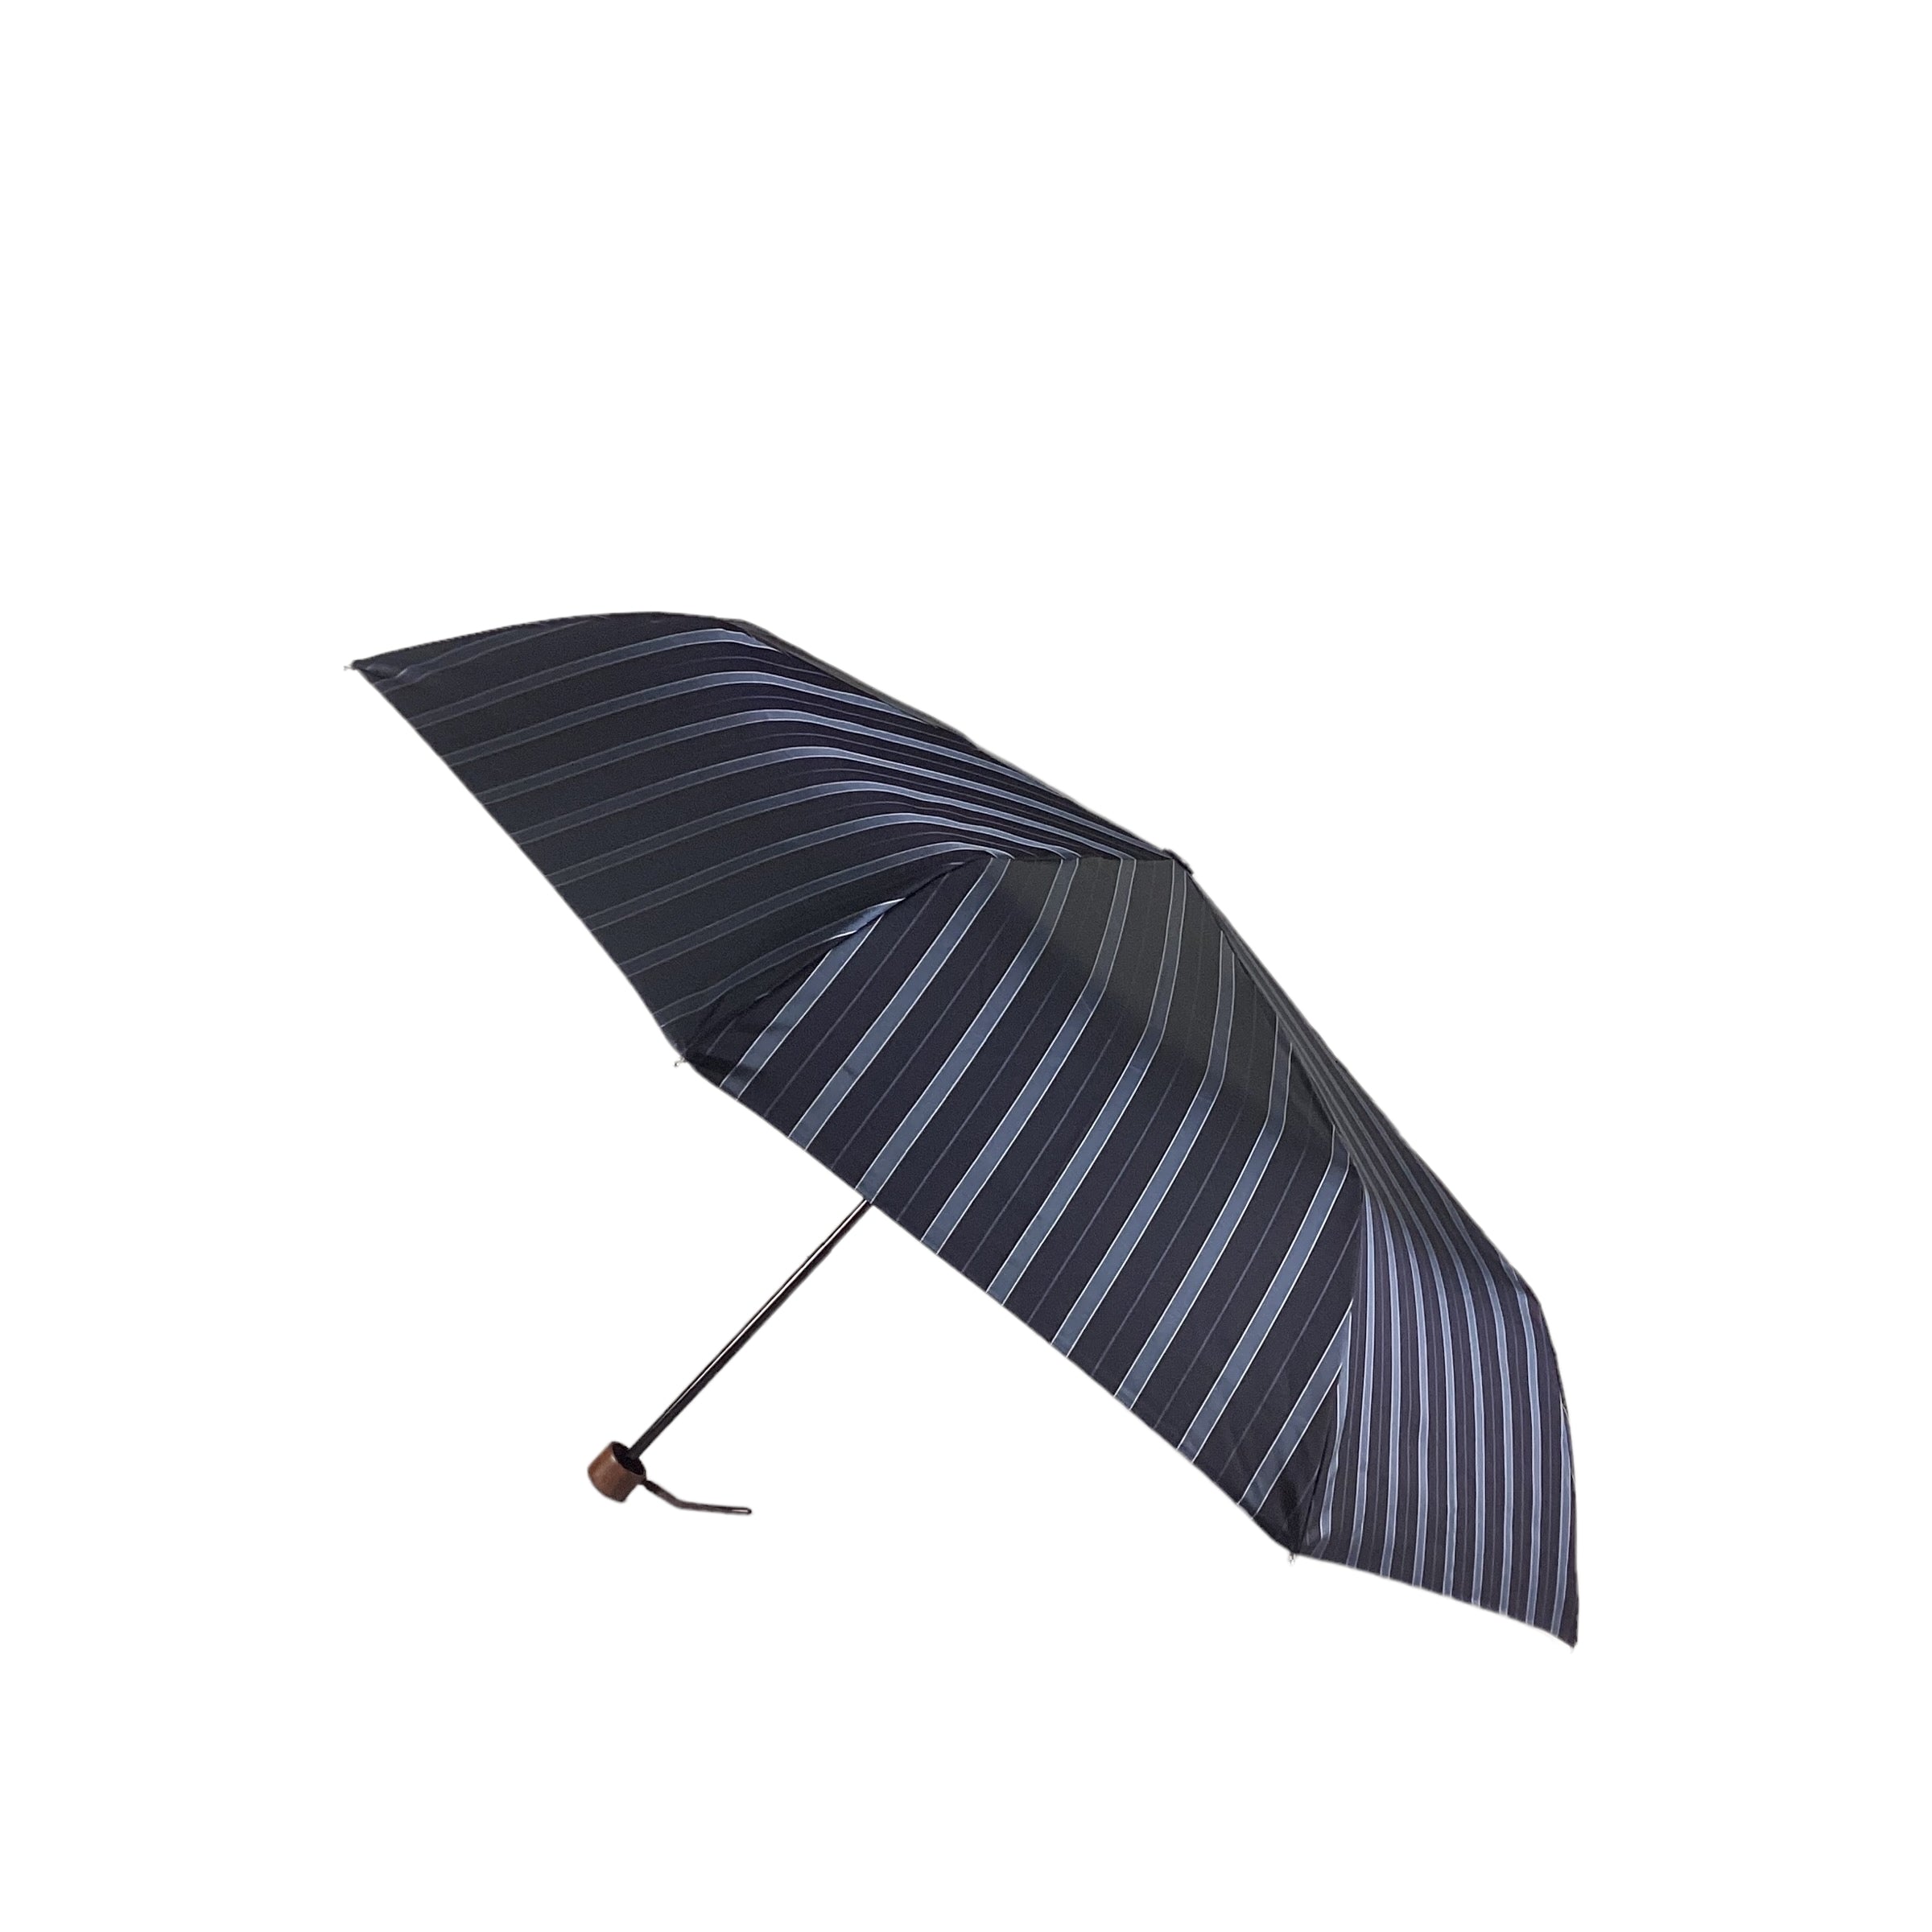 Alternate Stripe Wind Resistant Bone Folding Umbrella Navy Blue